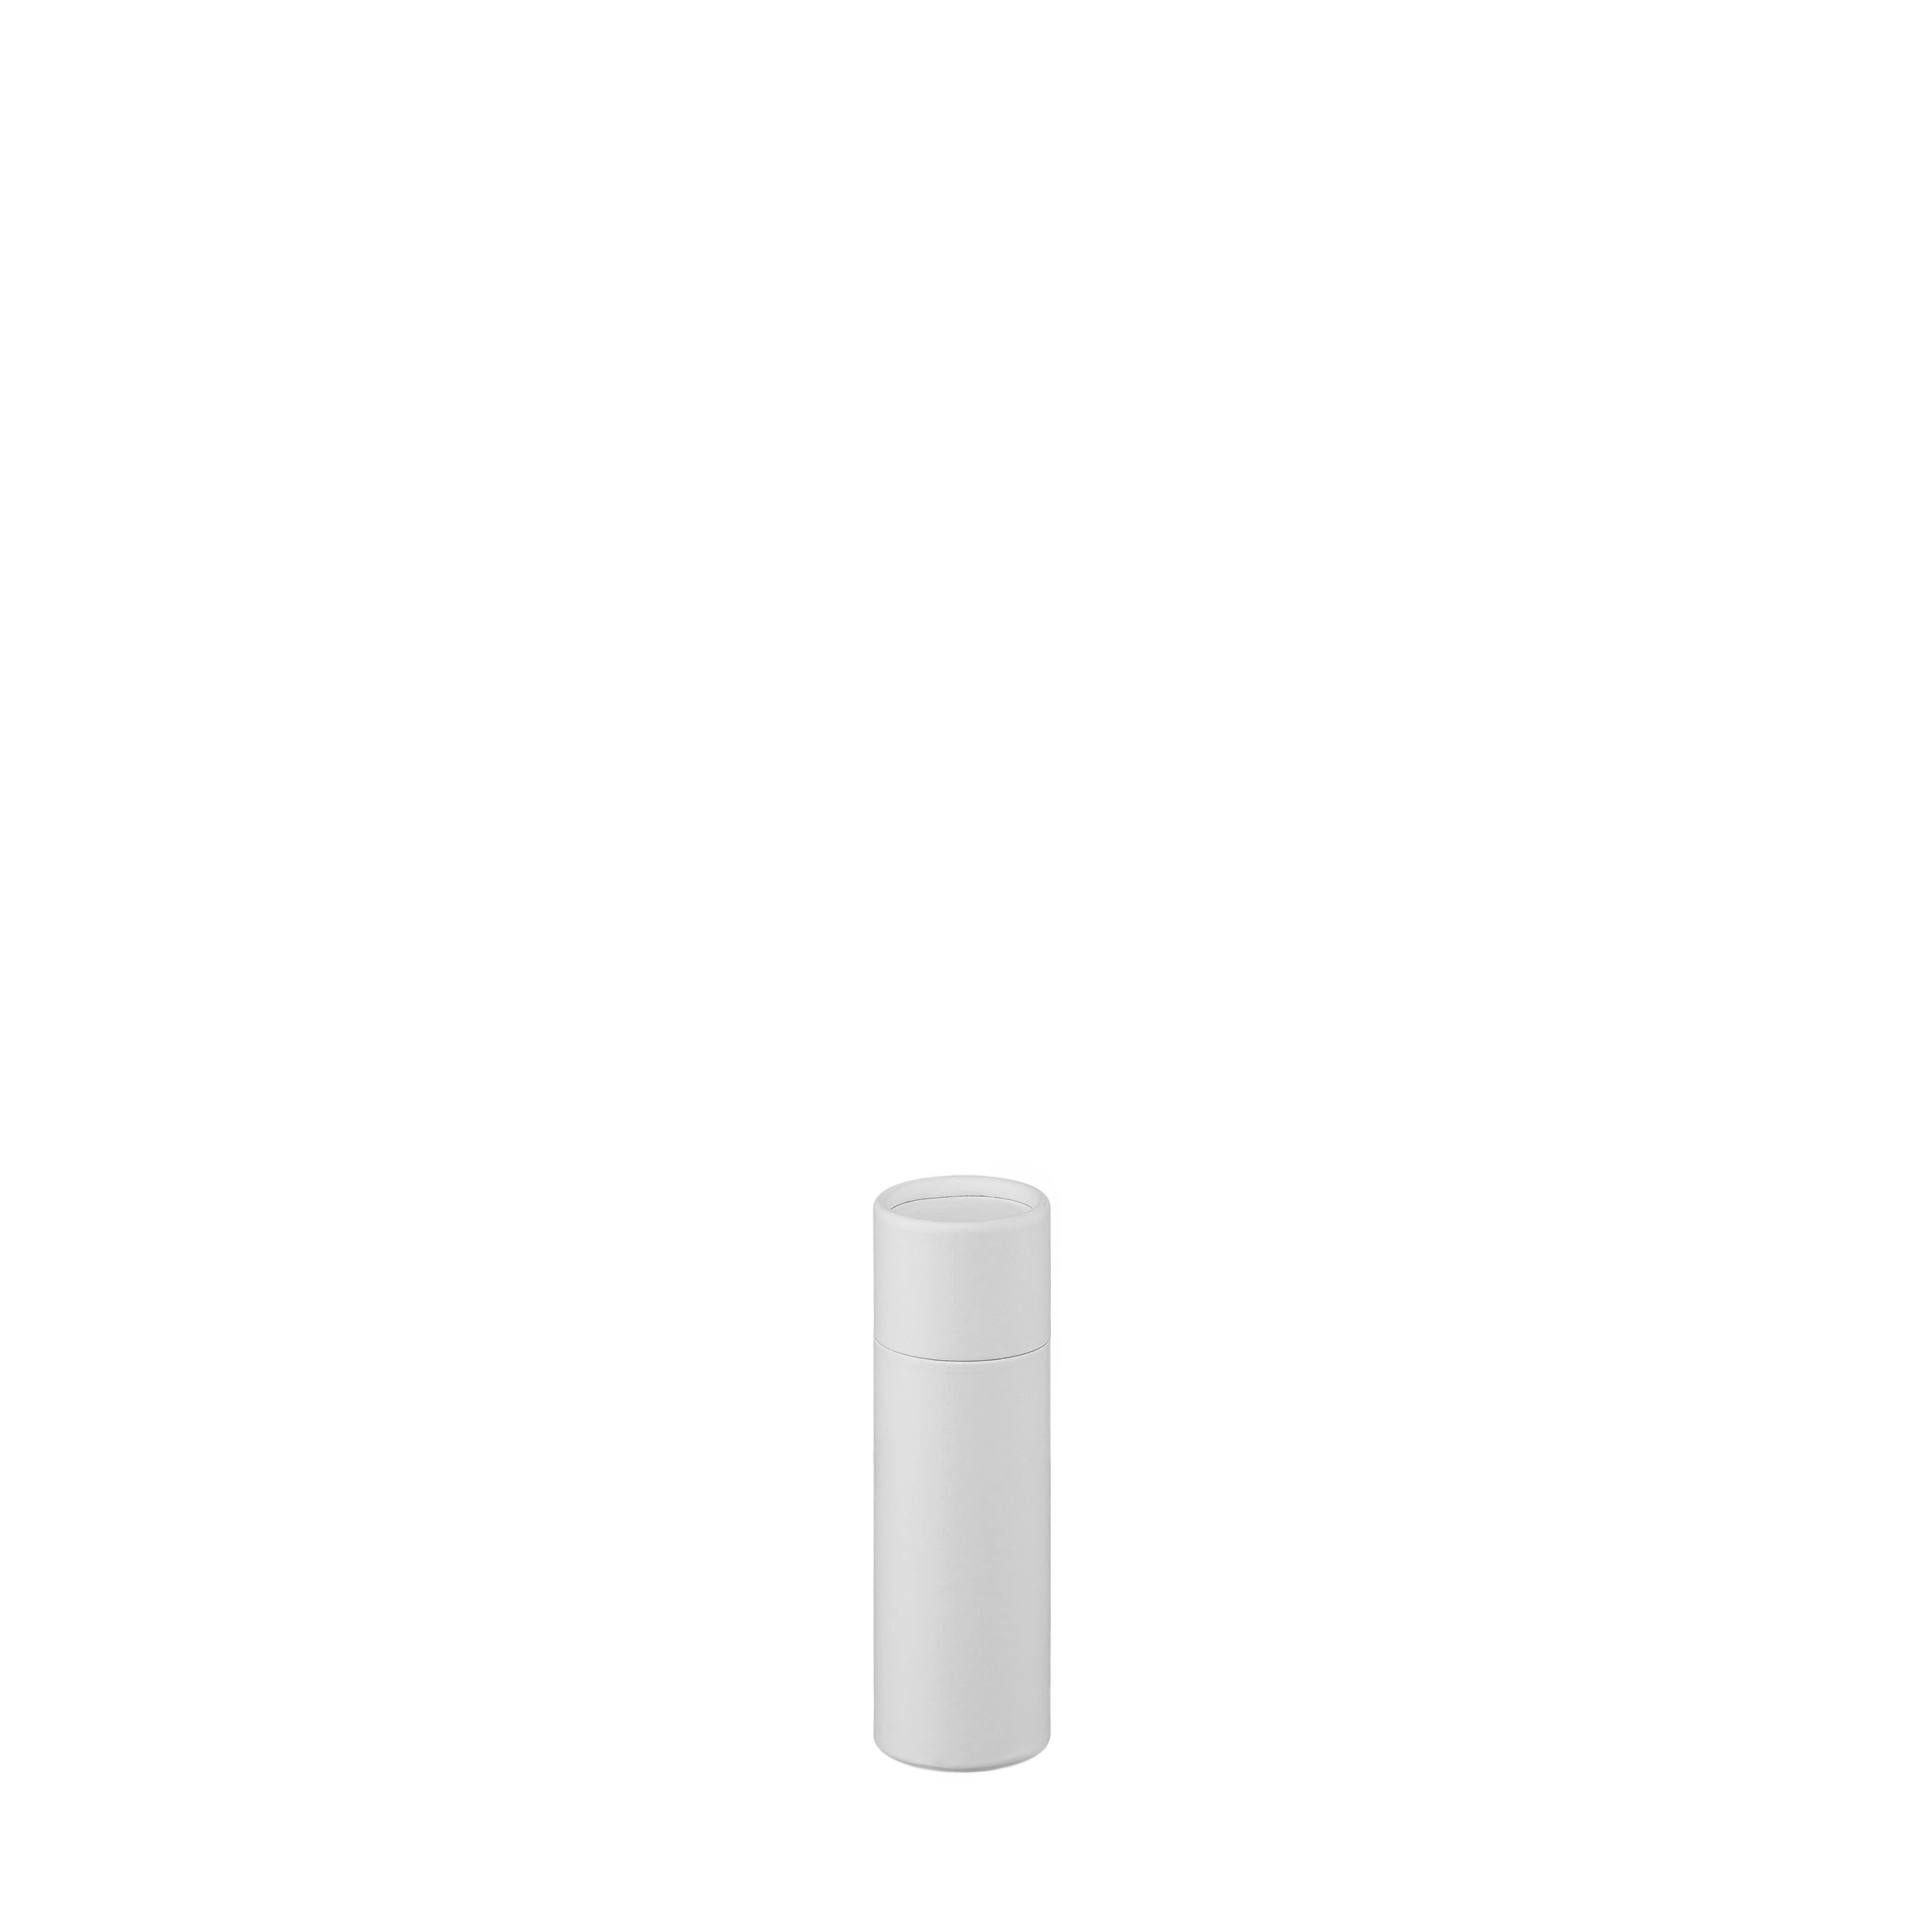 Pappdose weiß | 110 x 34 mm I food grade